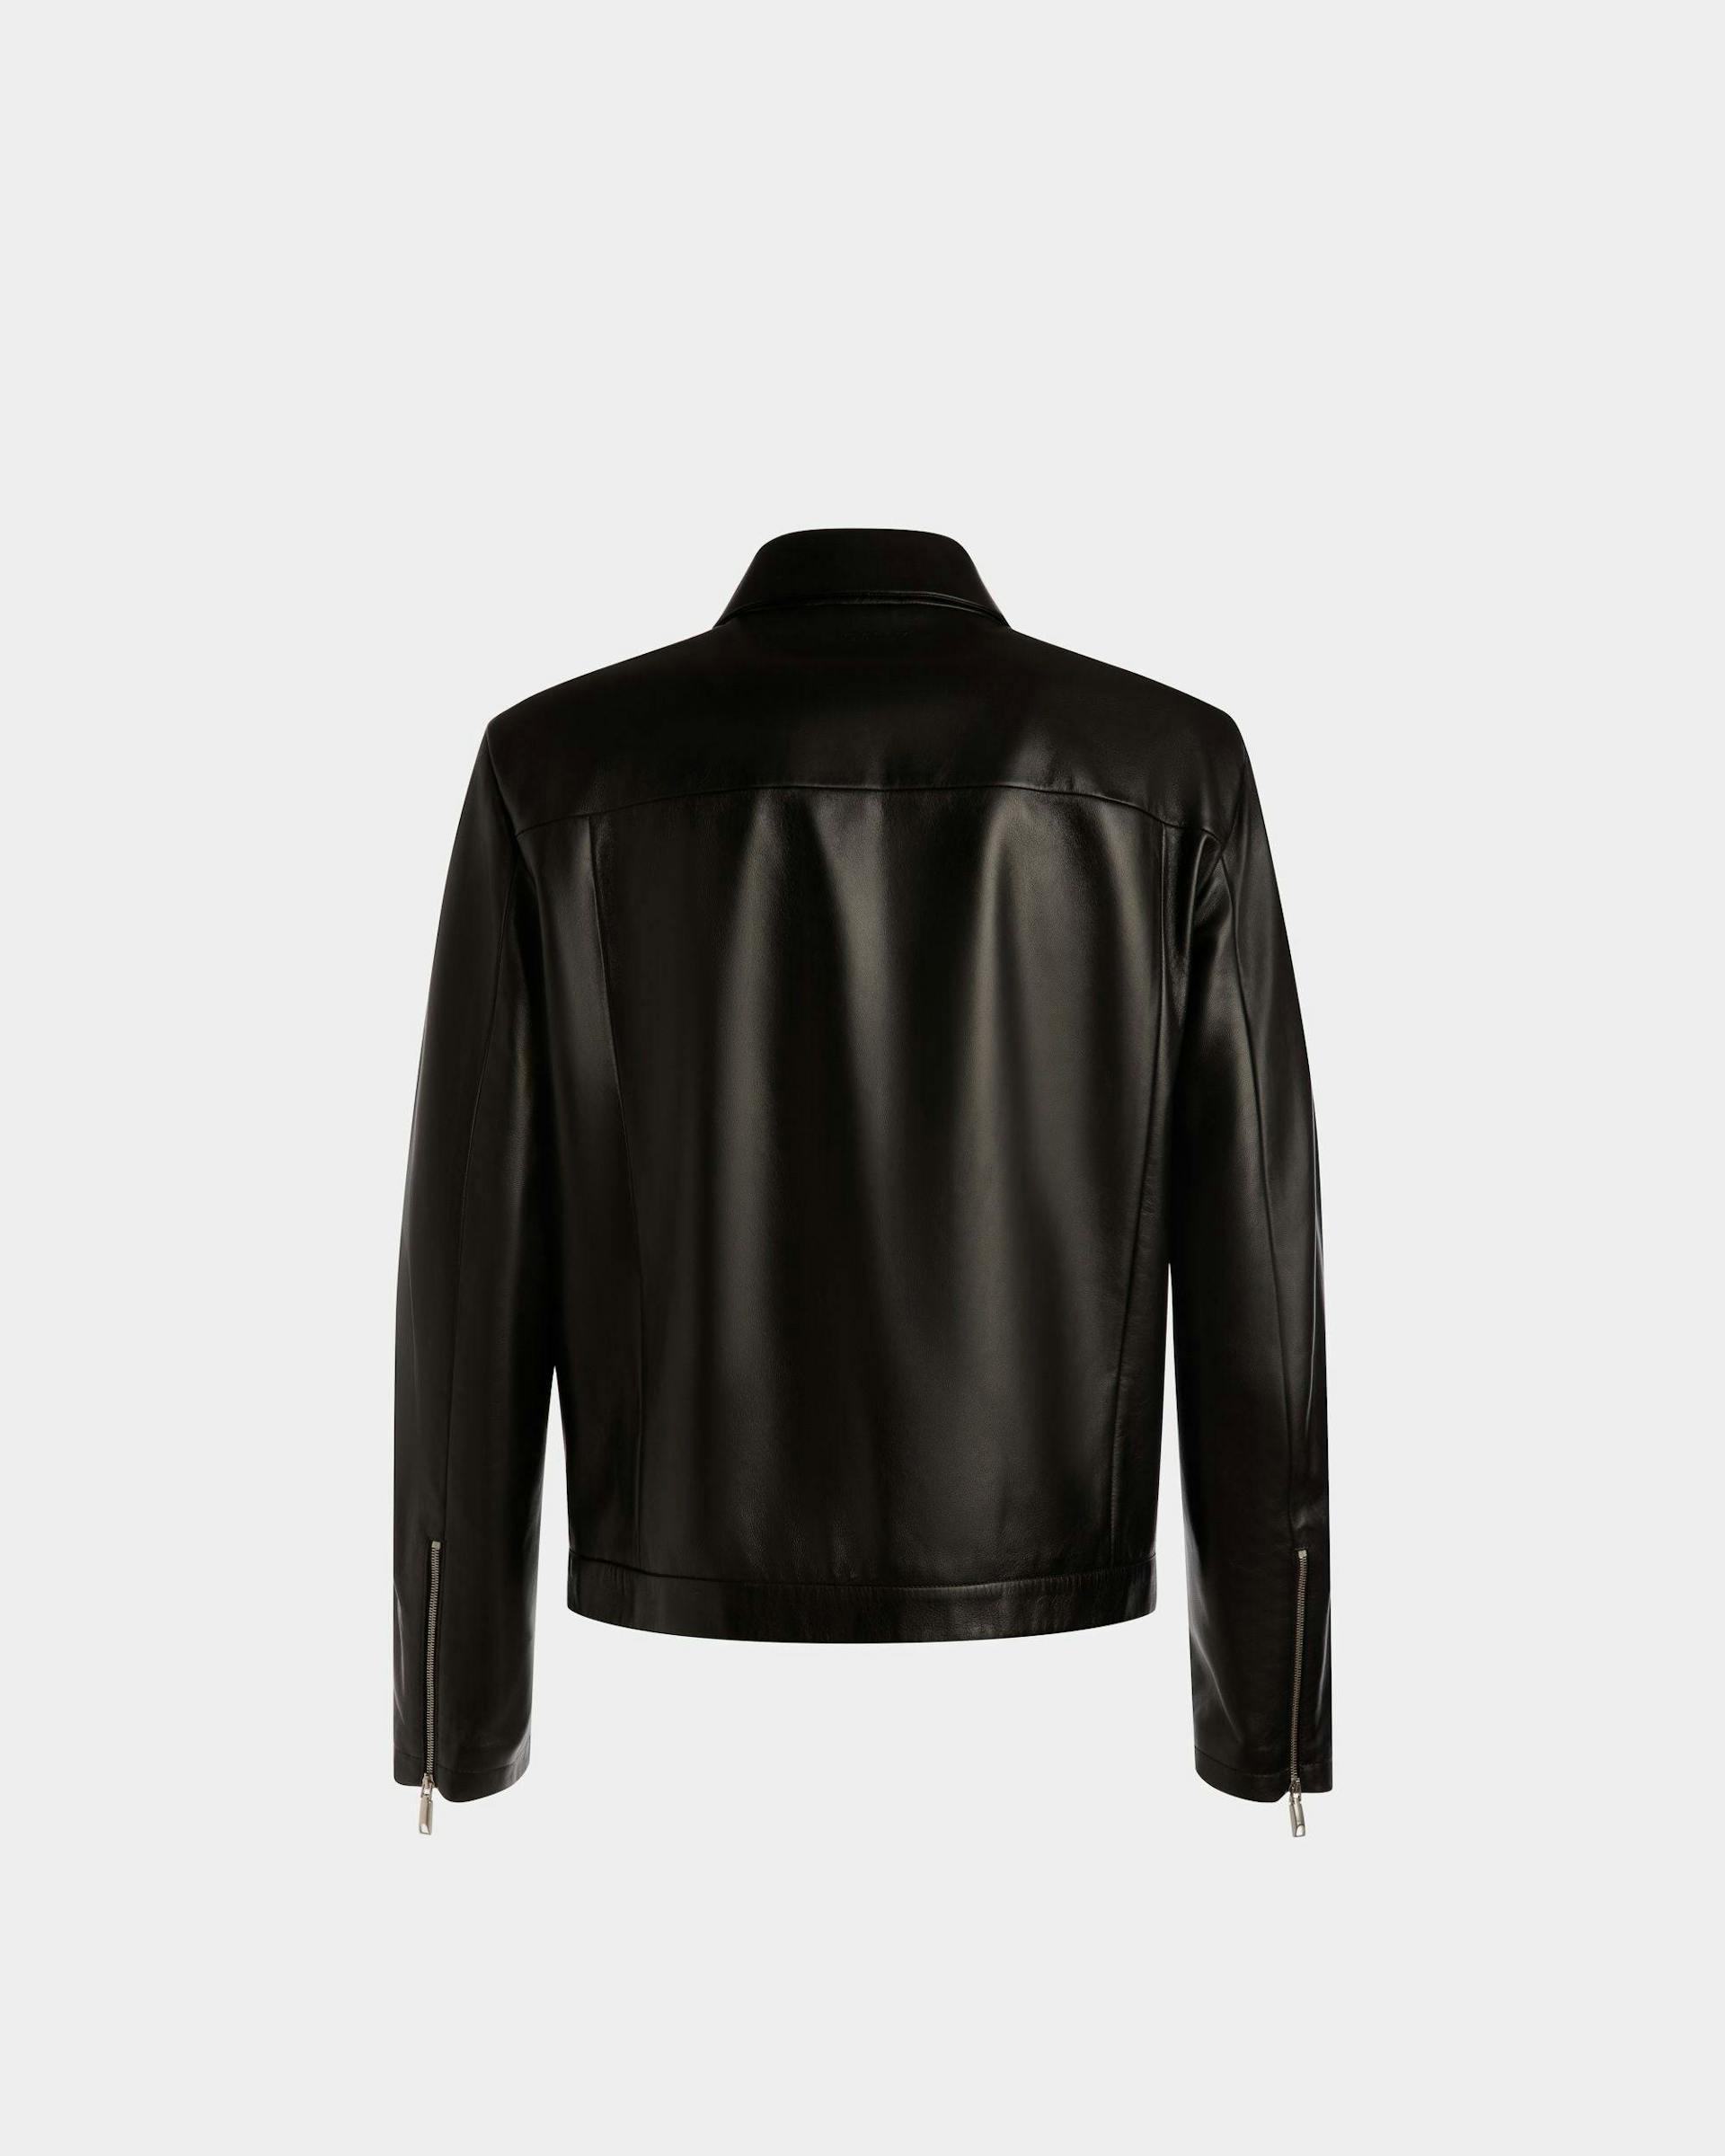 Men's Bomber Jacket In Black Leather | Bally | Still Life Back